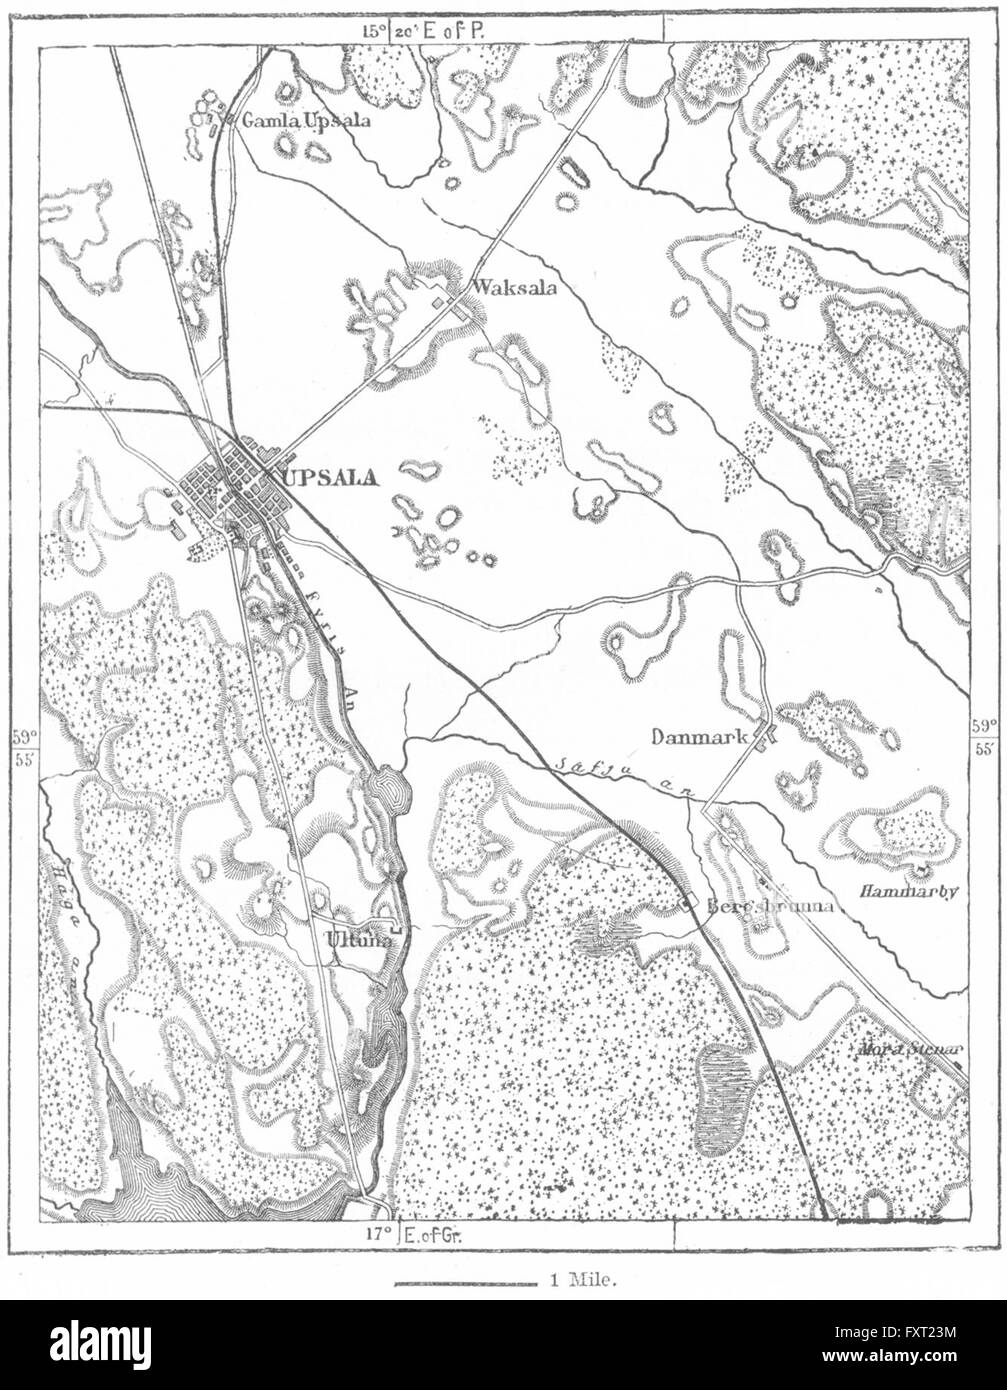 SWEDEN: Uppsala, sketch map, c1885 Stock Photo